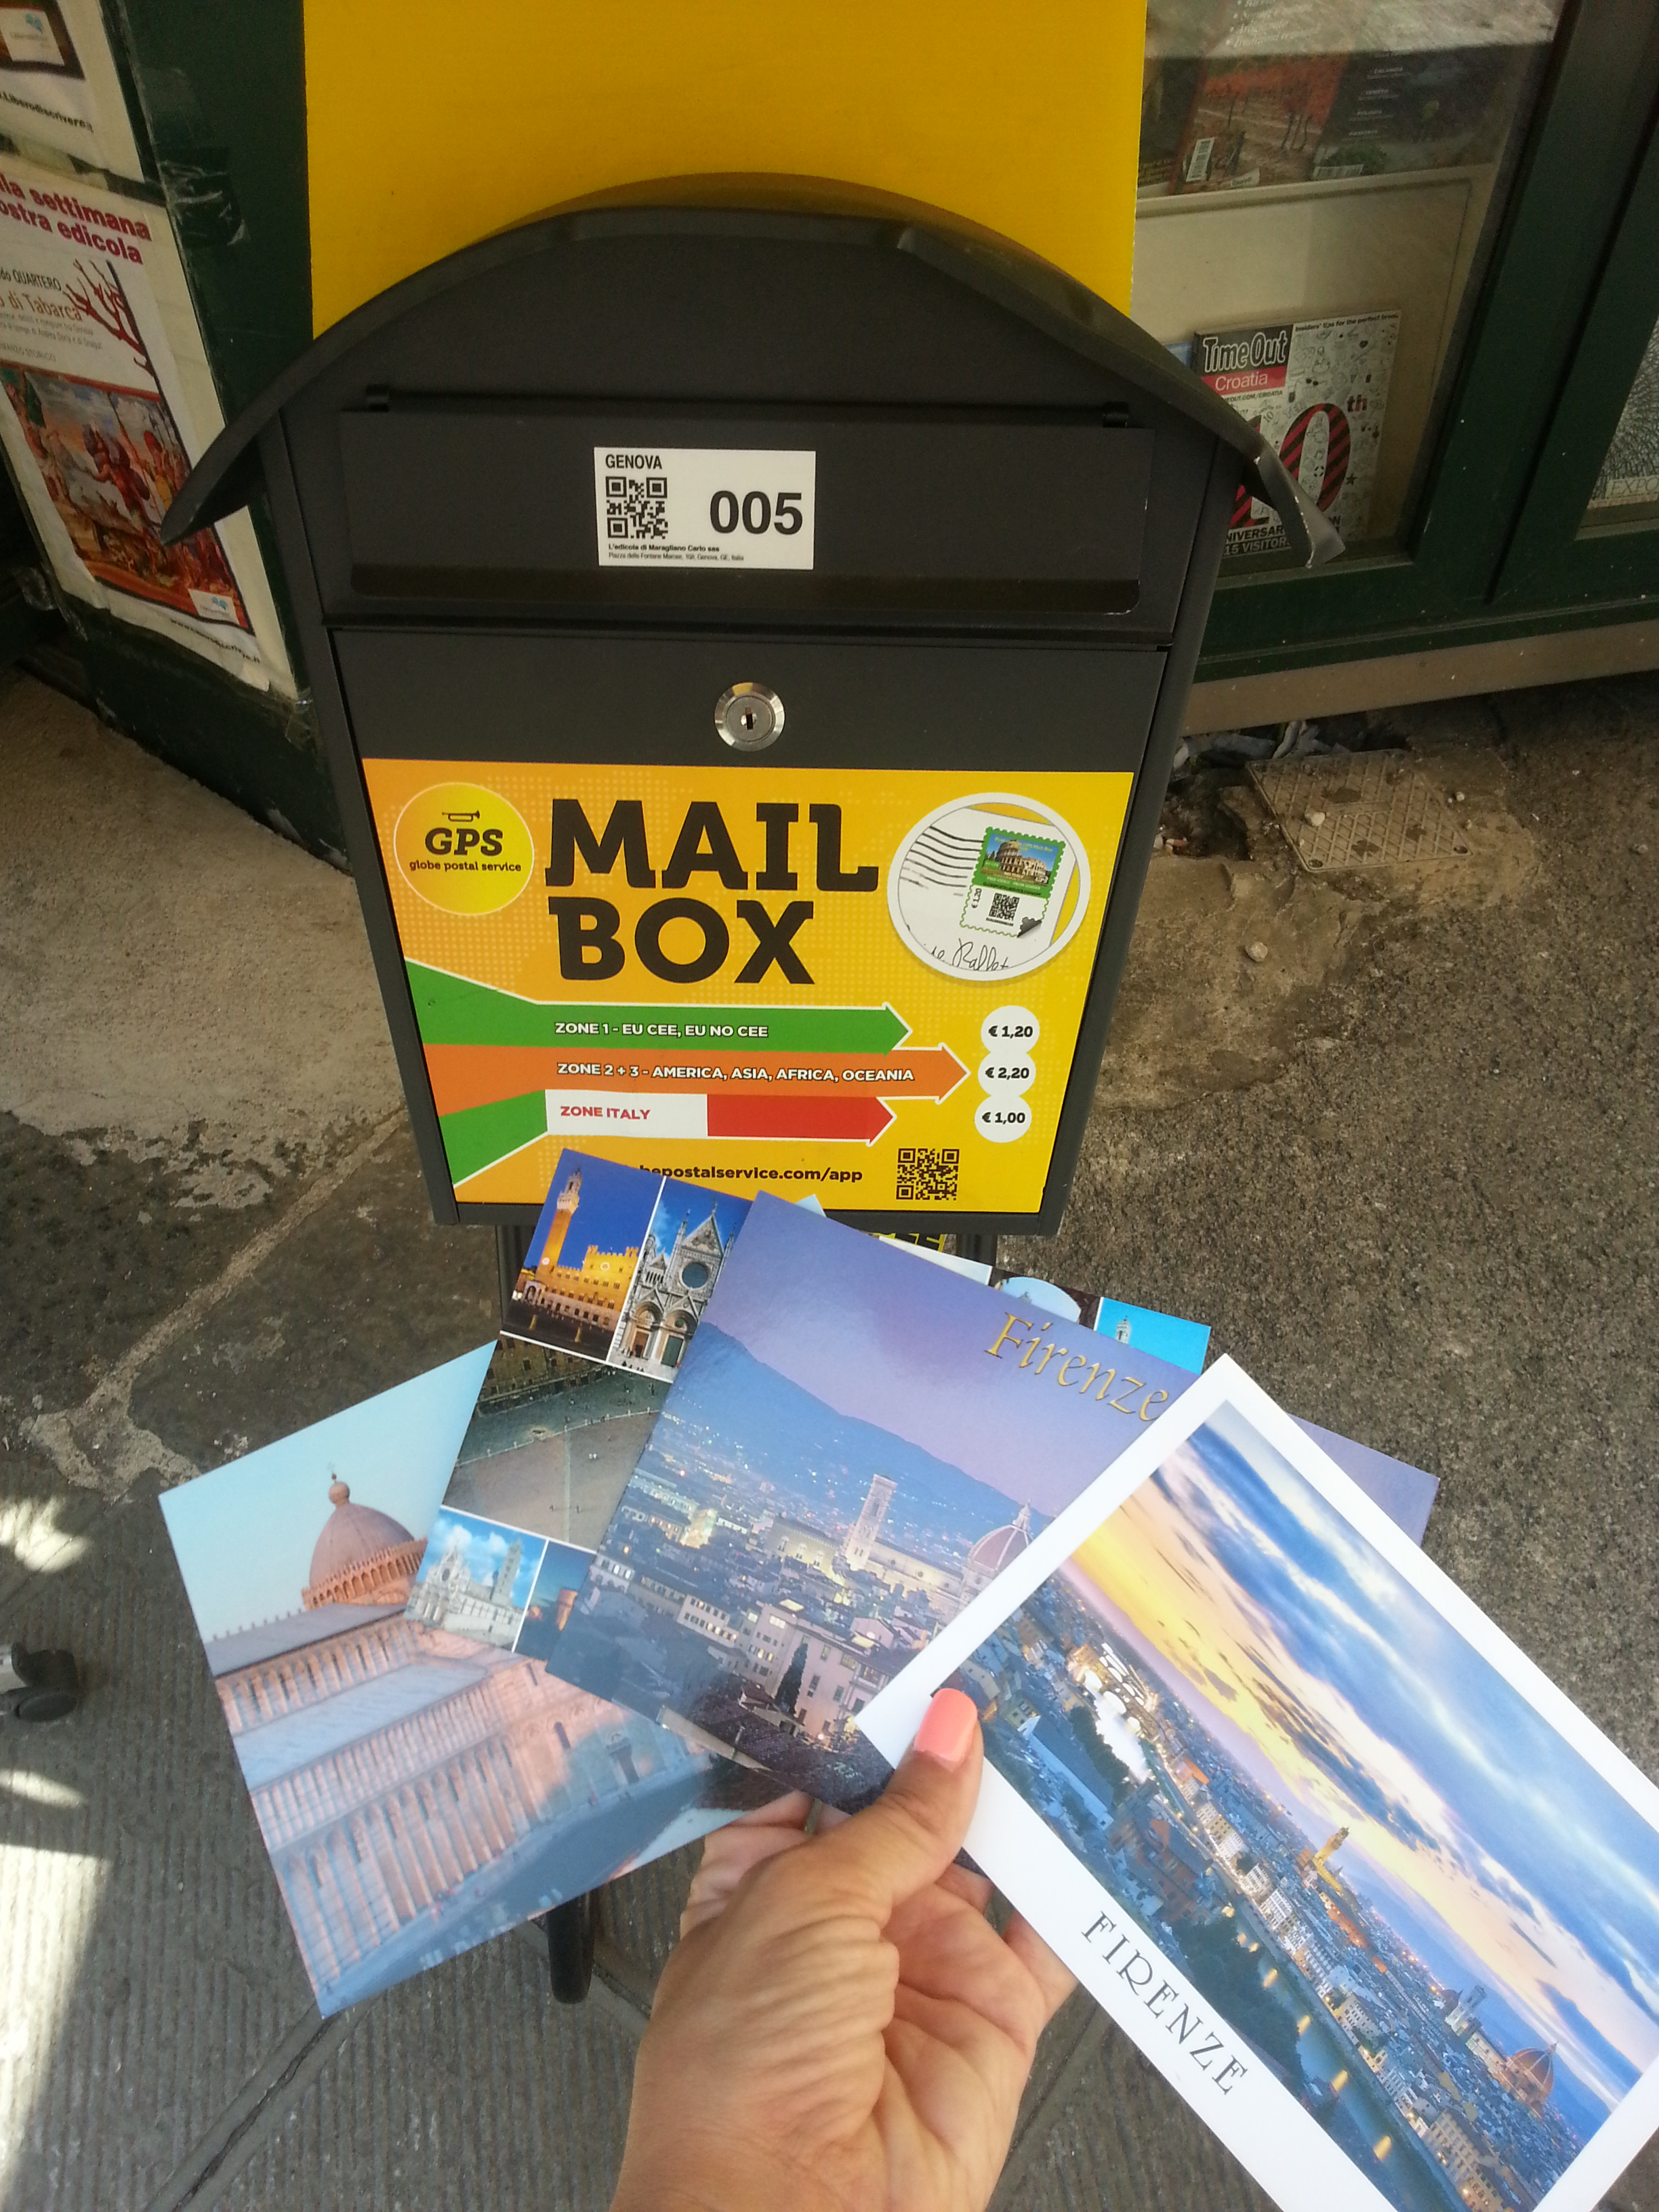 GPS Post Mail Box in Genoa